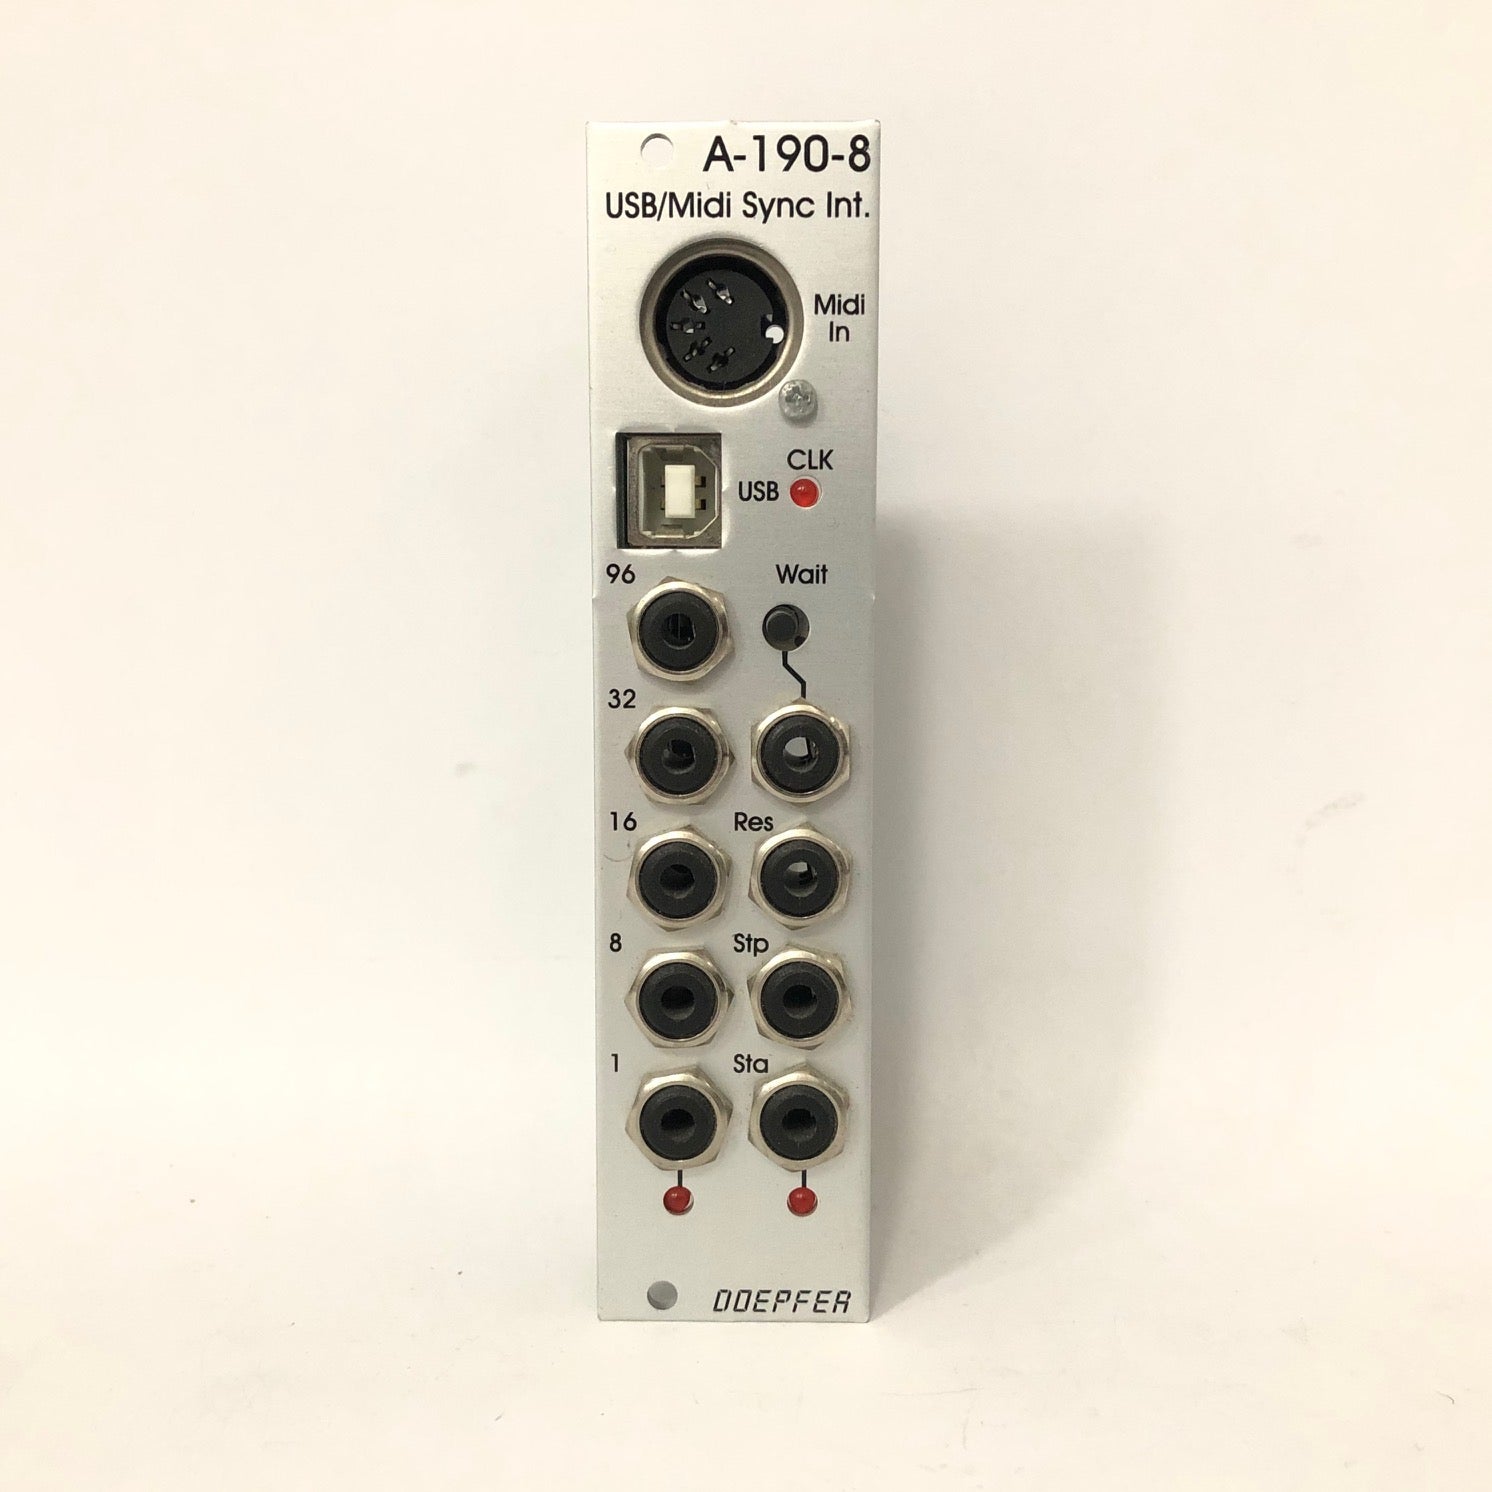 Doepfer A-190-8 USB/Midi-to-Sync